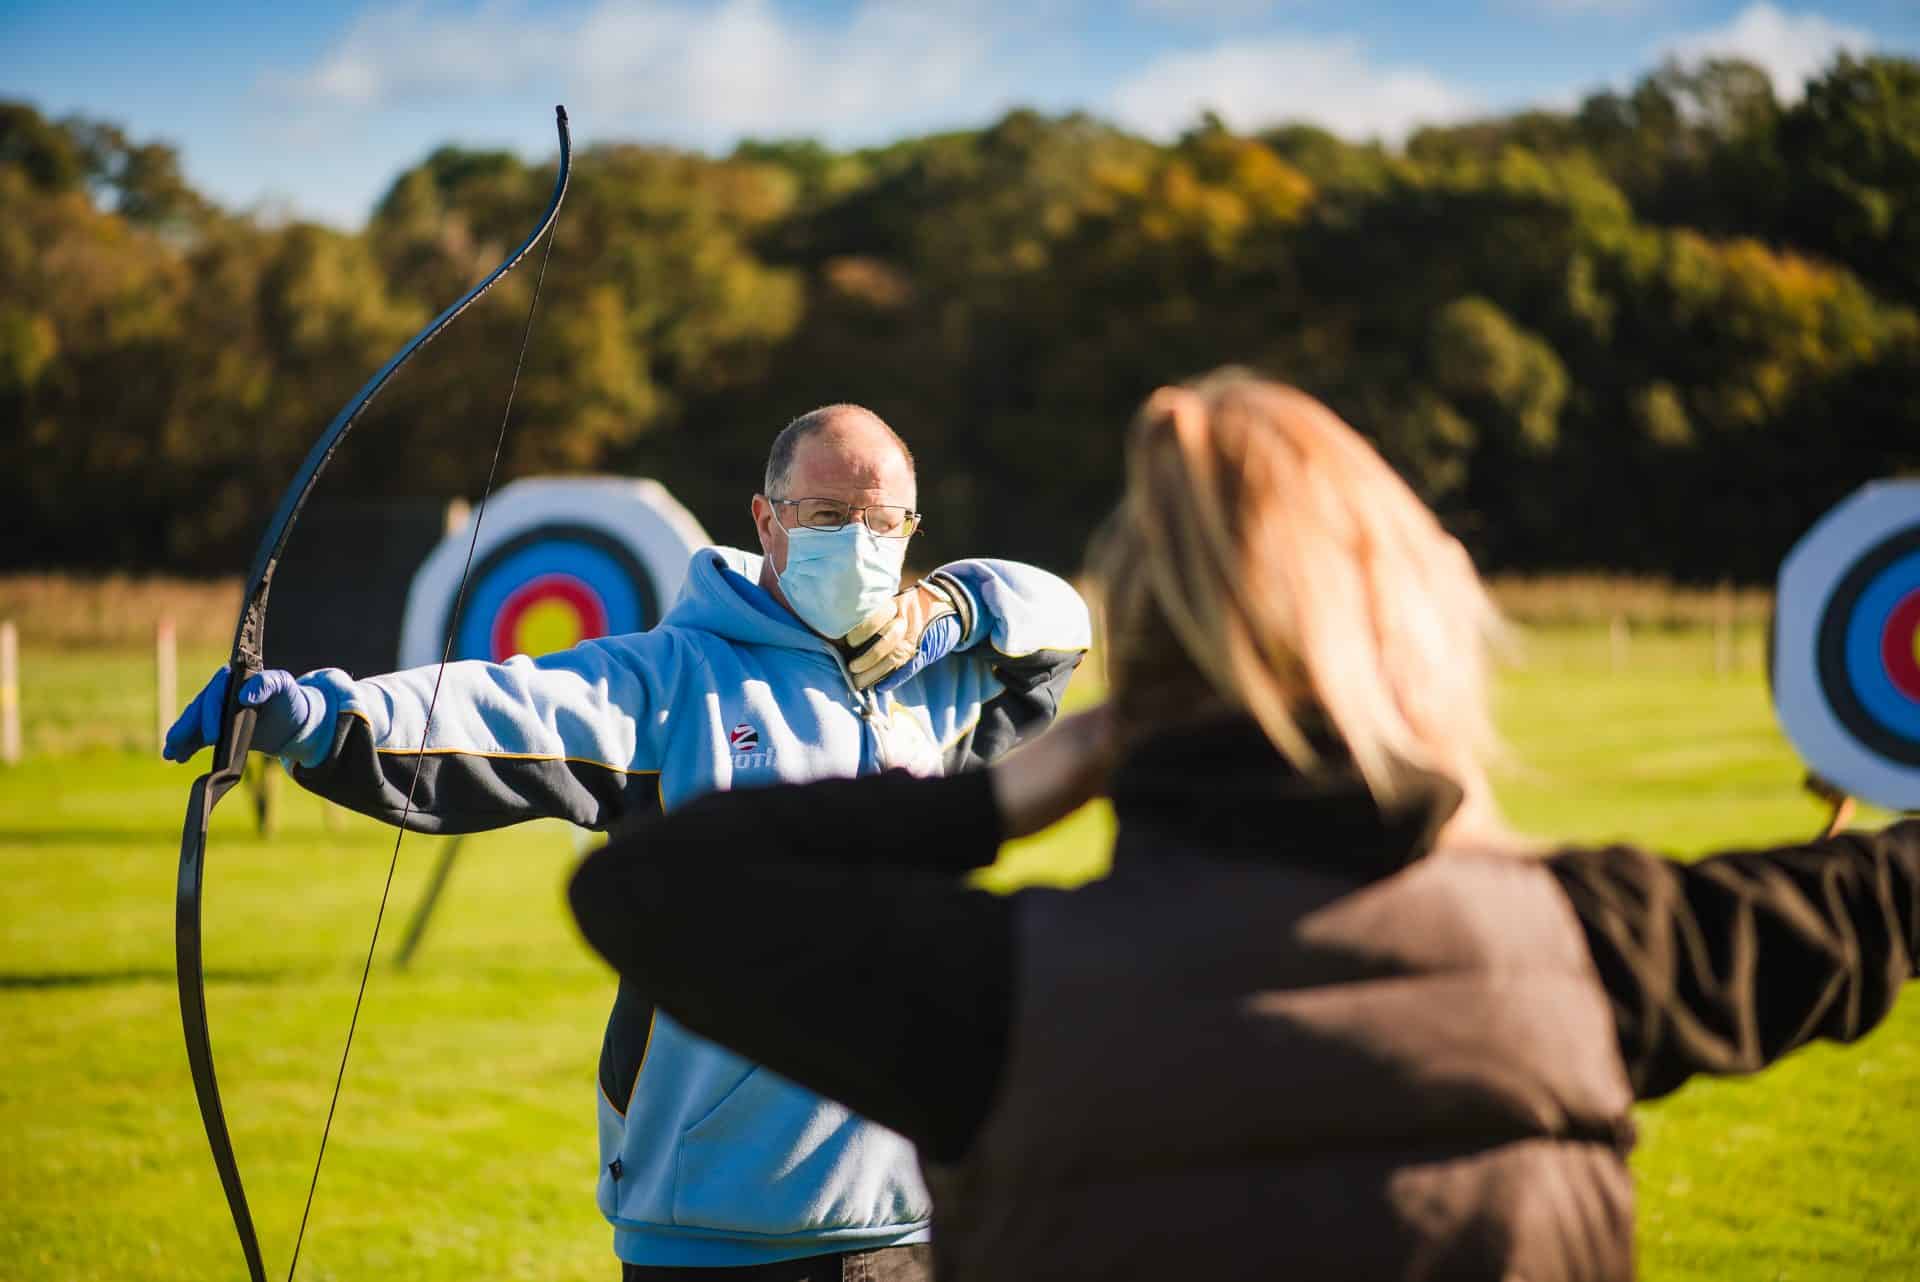 Volunteer at archery range